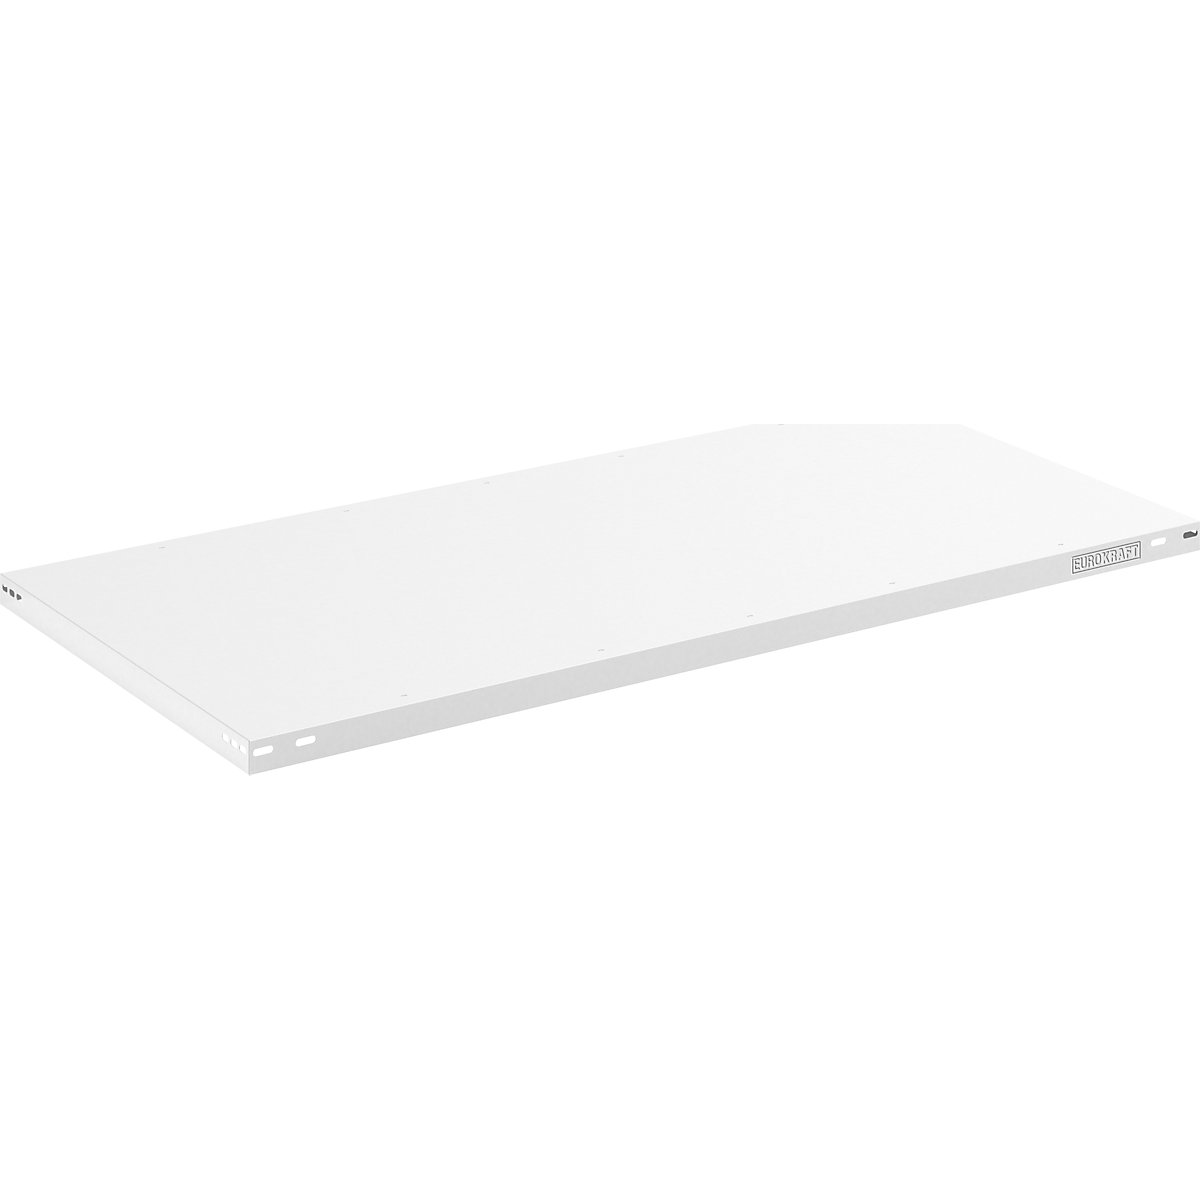 Shelf – eurokraft pro, light grey, medium duty, WxD 1300 x 800 mm